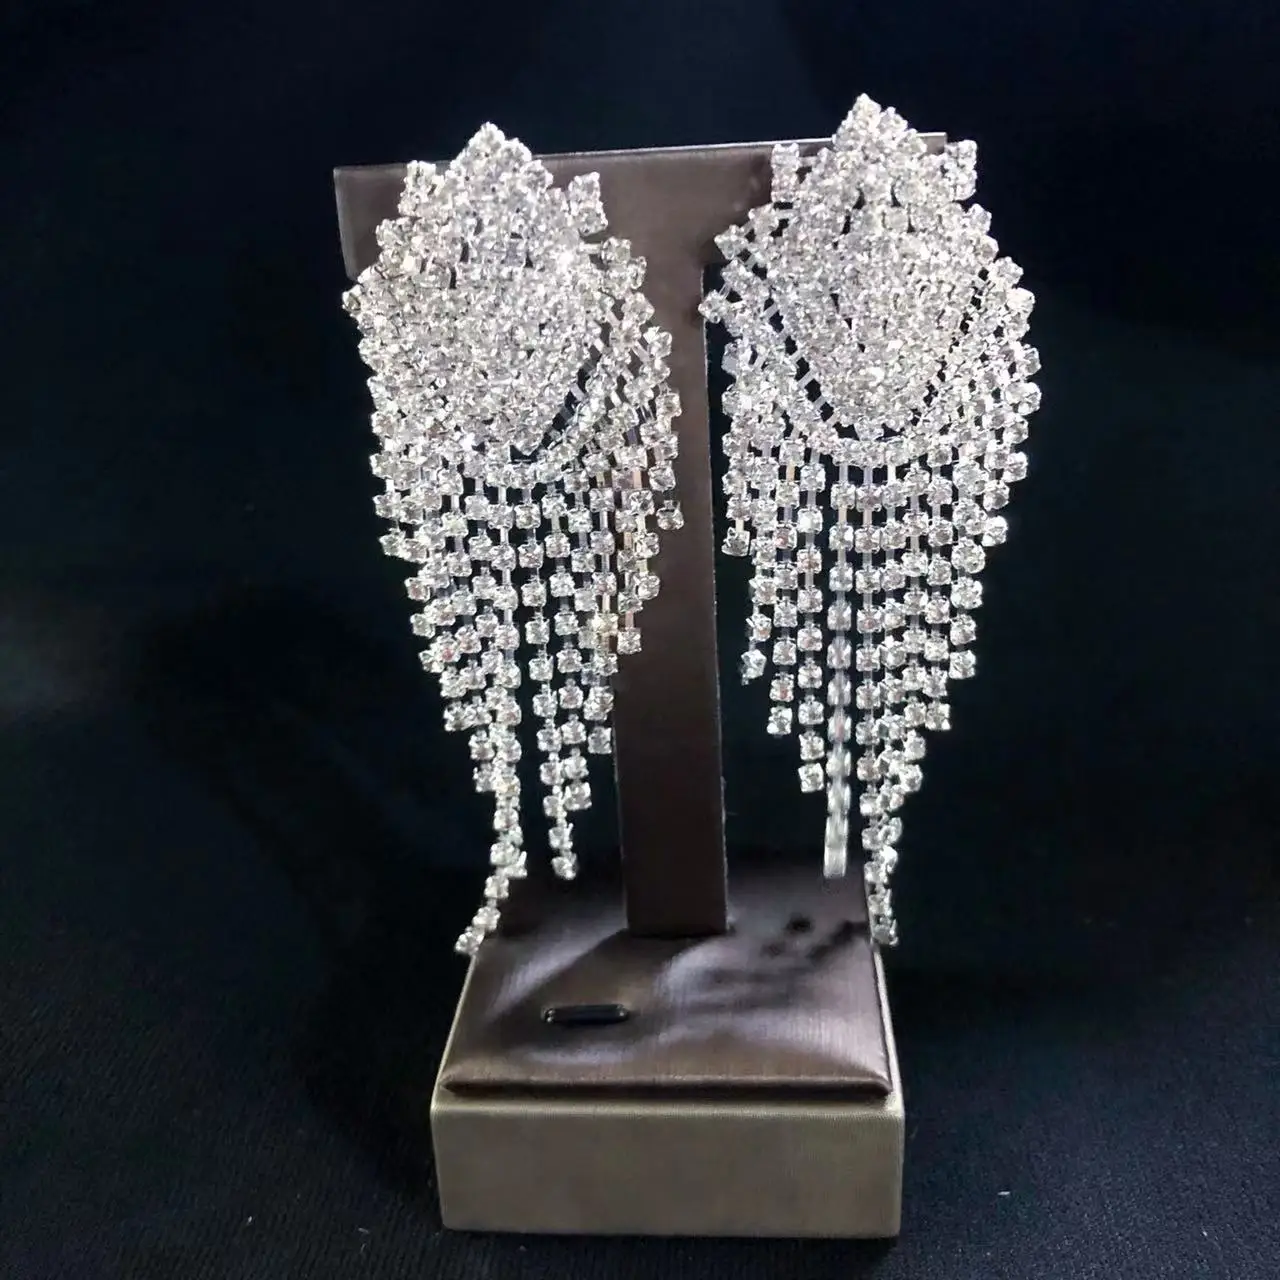 Large Rhinestone Earrings Fashion Statement glittering crystal large Dangling Earrings women's nightclub Party Wedding Jewelry images - 6